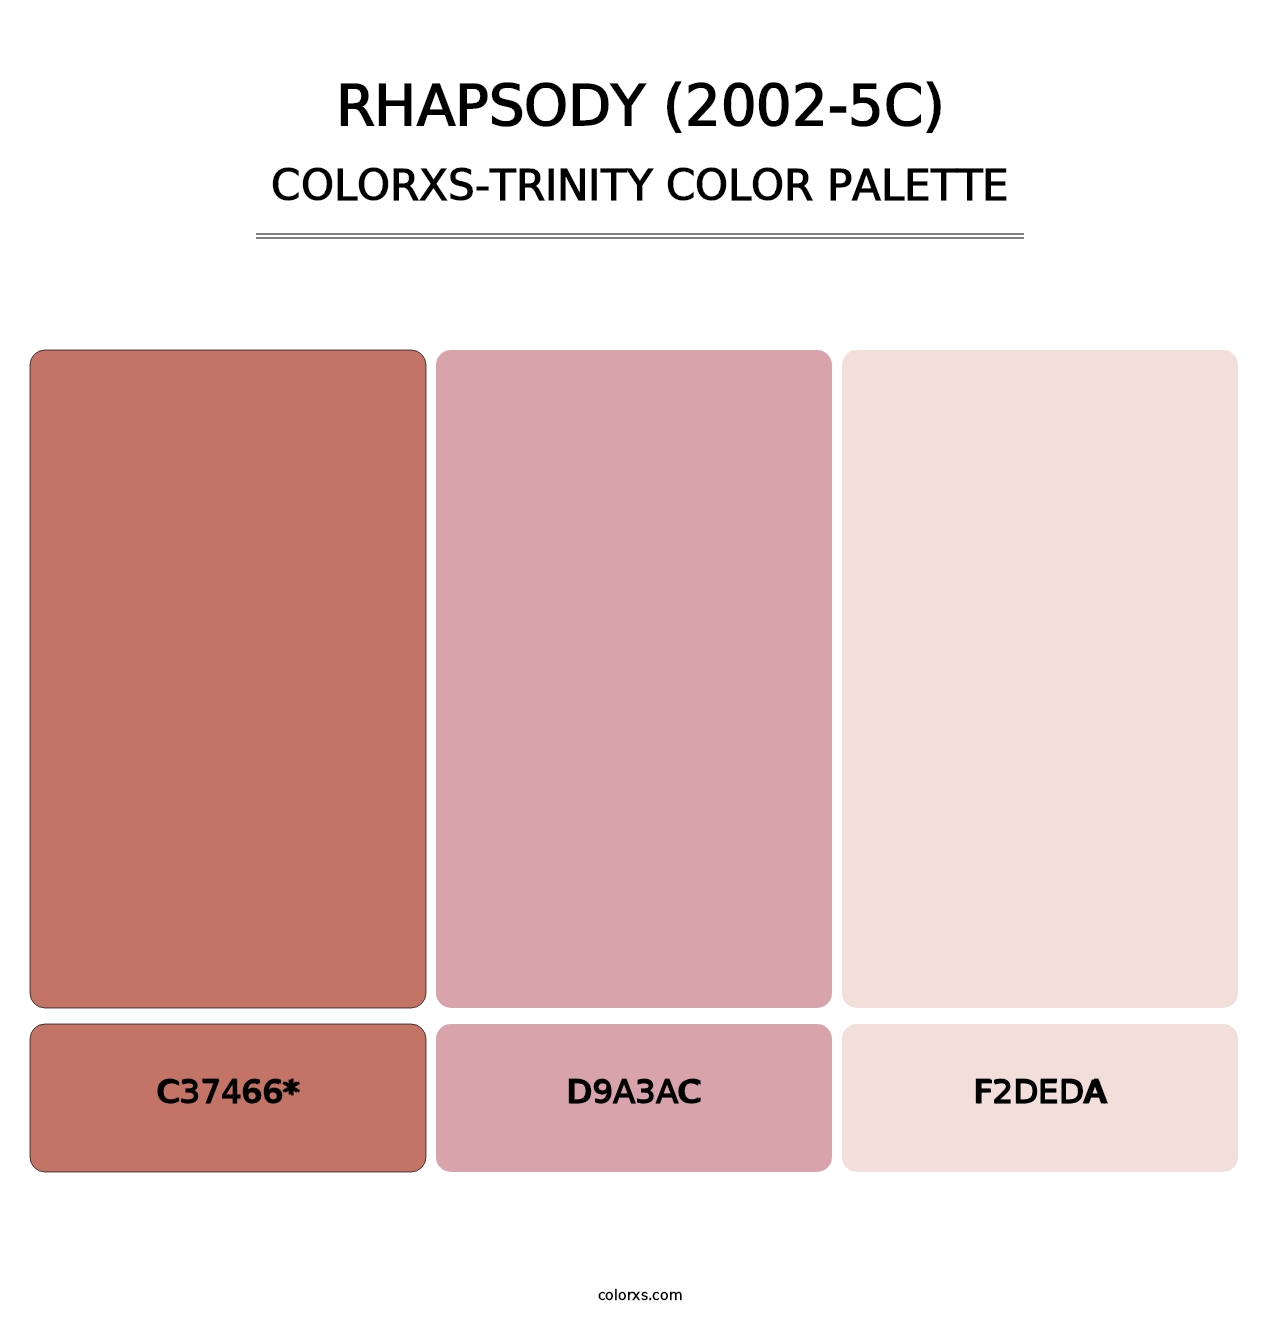 Rhapsody (2002-5C) - Colorxs Trinity Palette